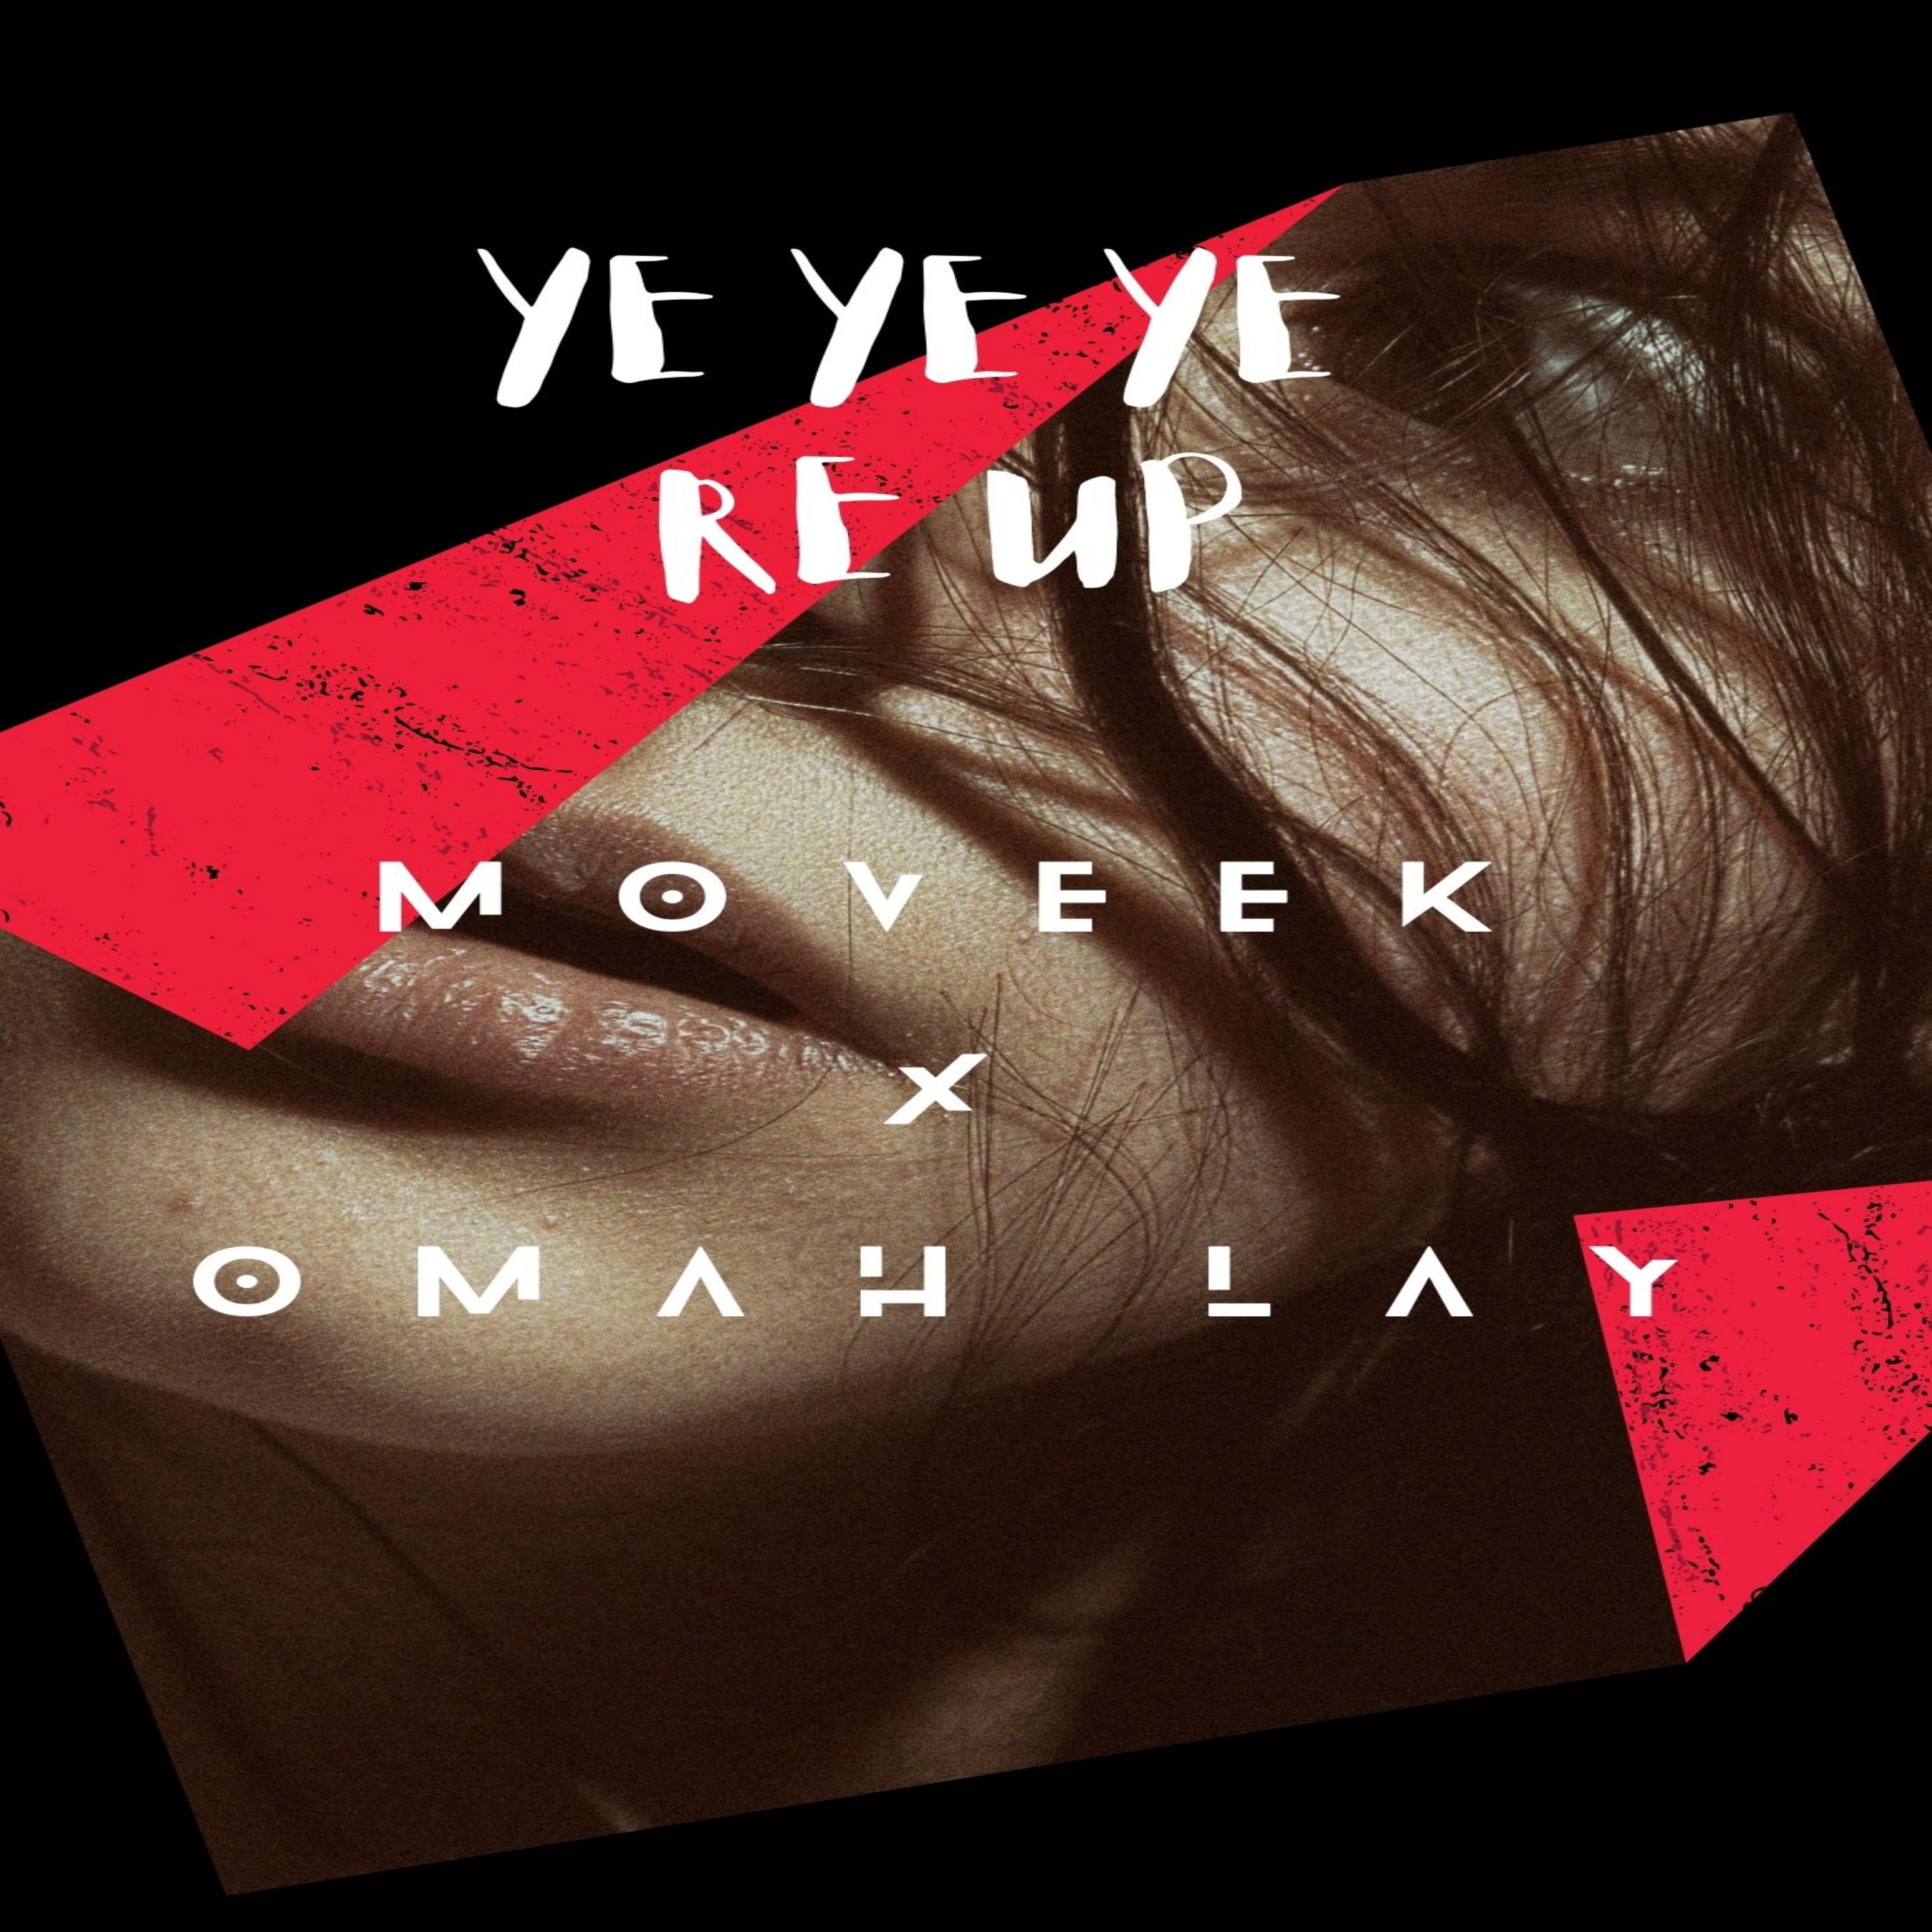 Moveek - Ye Ye Ye Re Up (feat. Omah_lay)